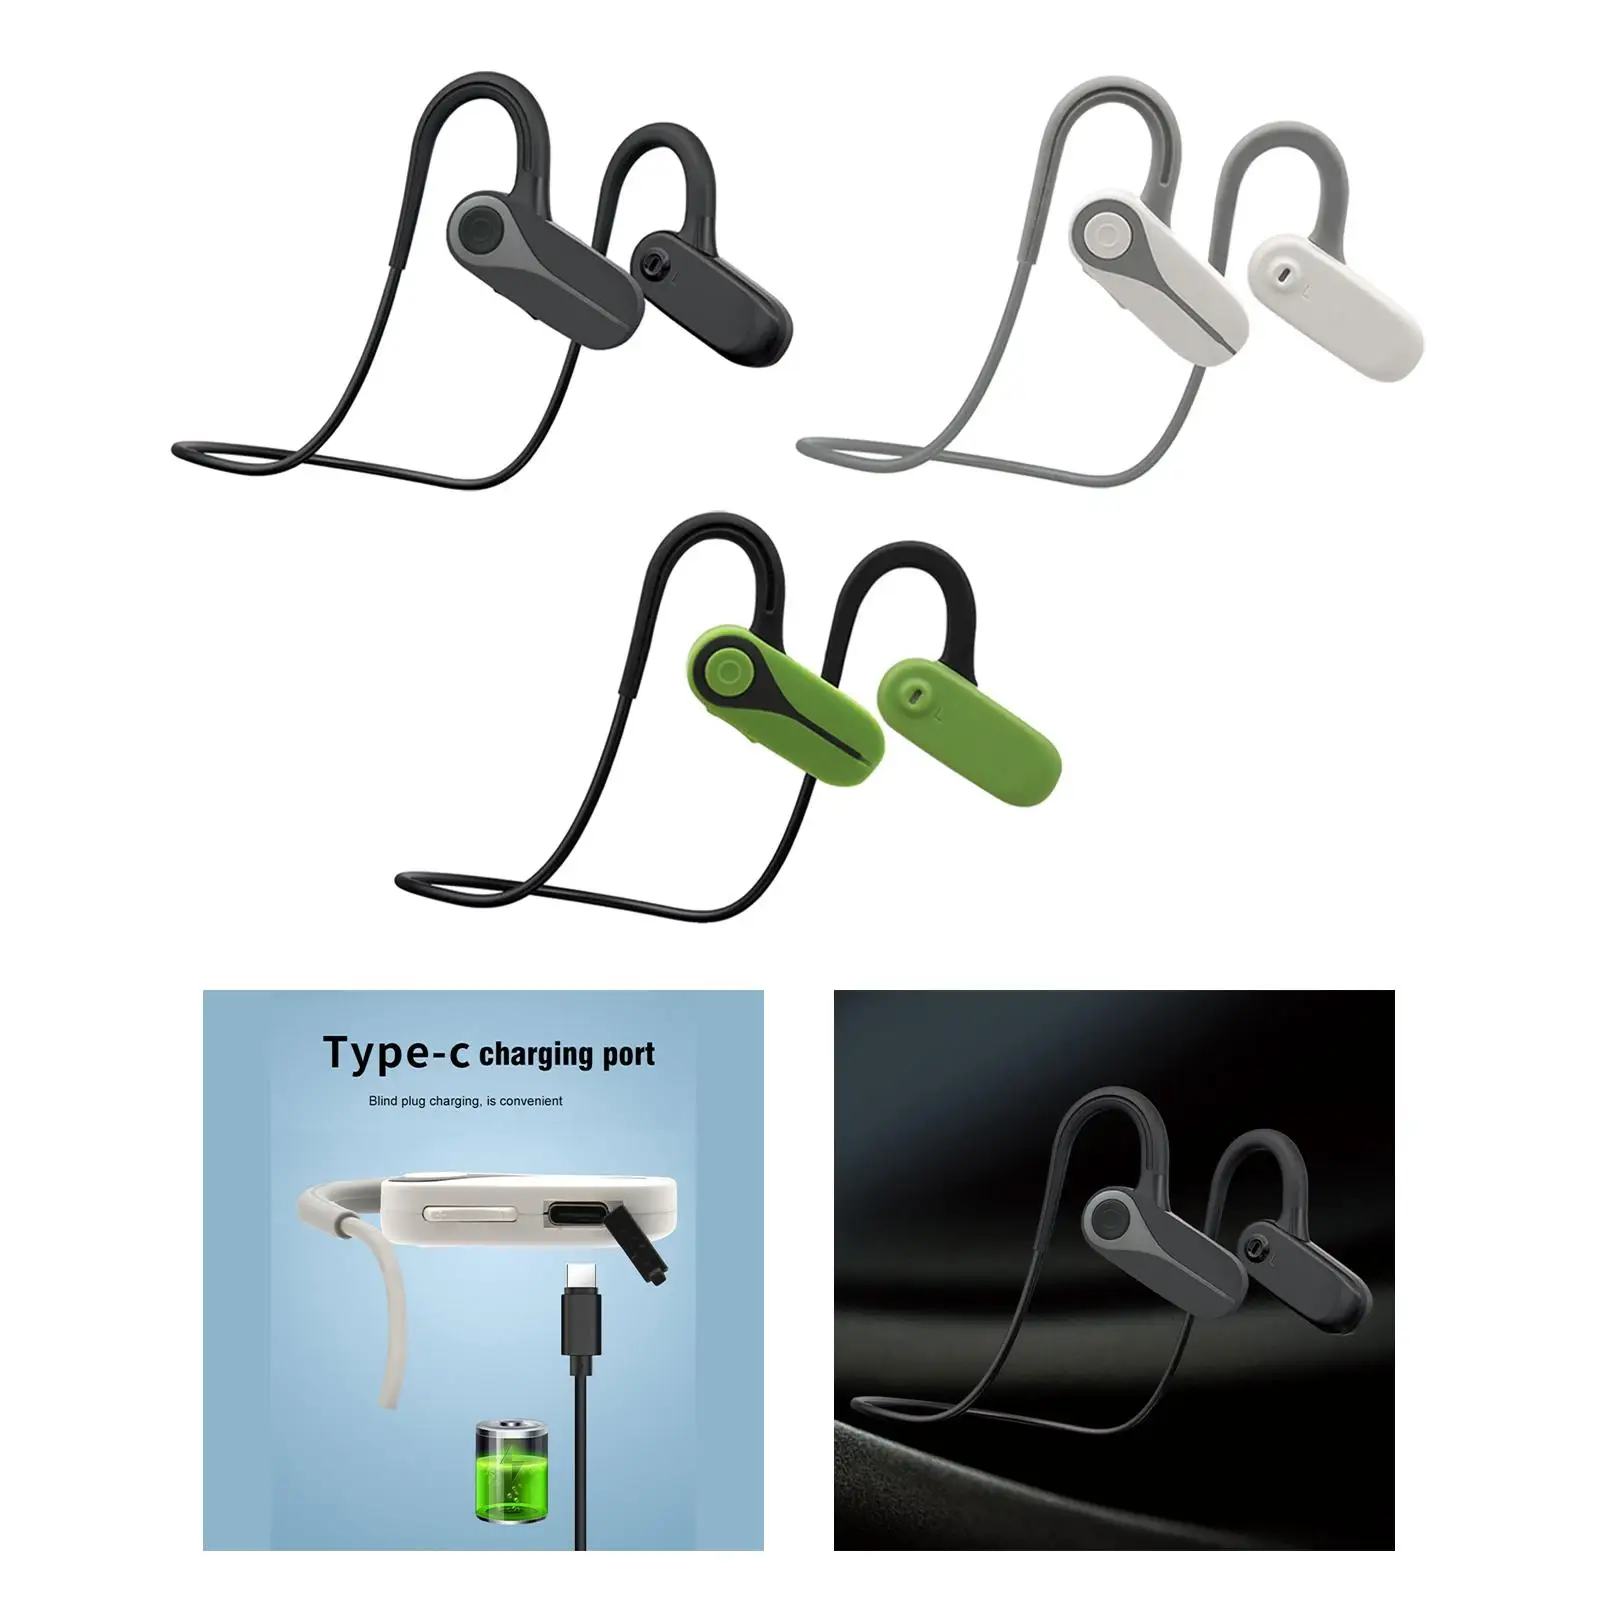 Bones Conduction Headphones HD Stereo B8 Sport Earphones for Cycling Driving